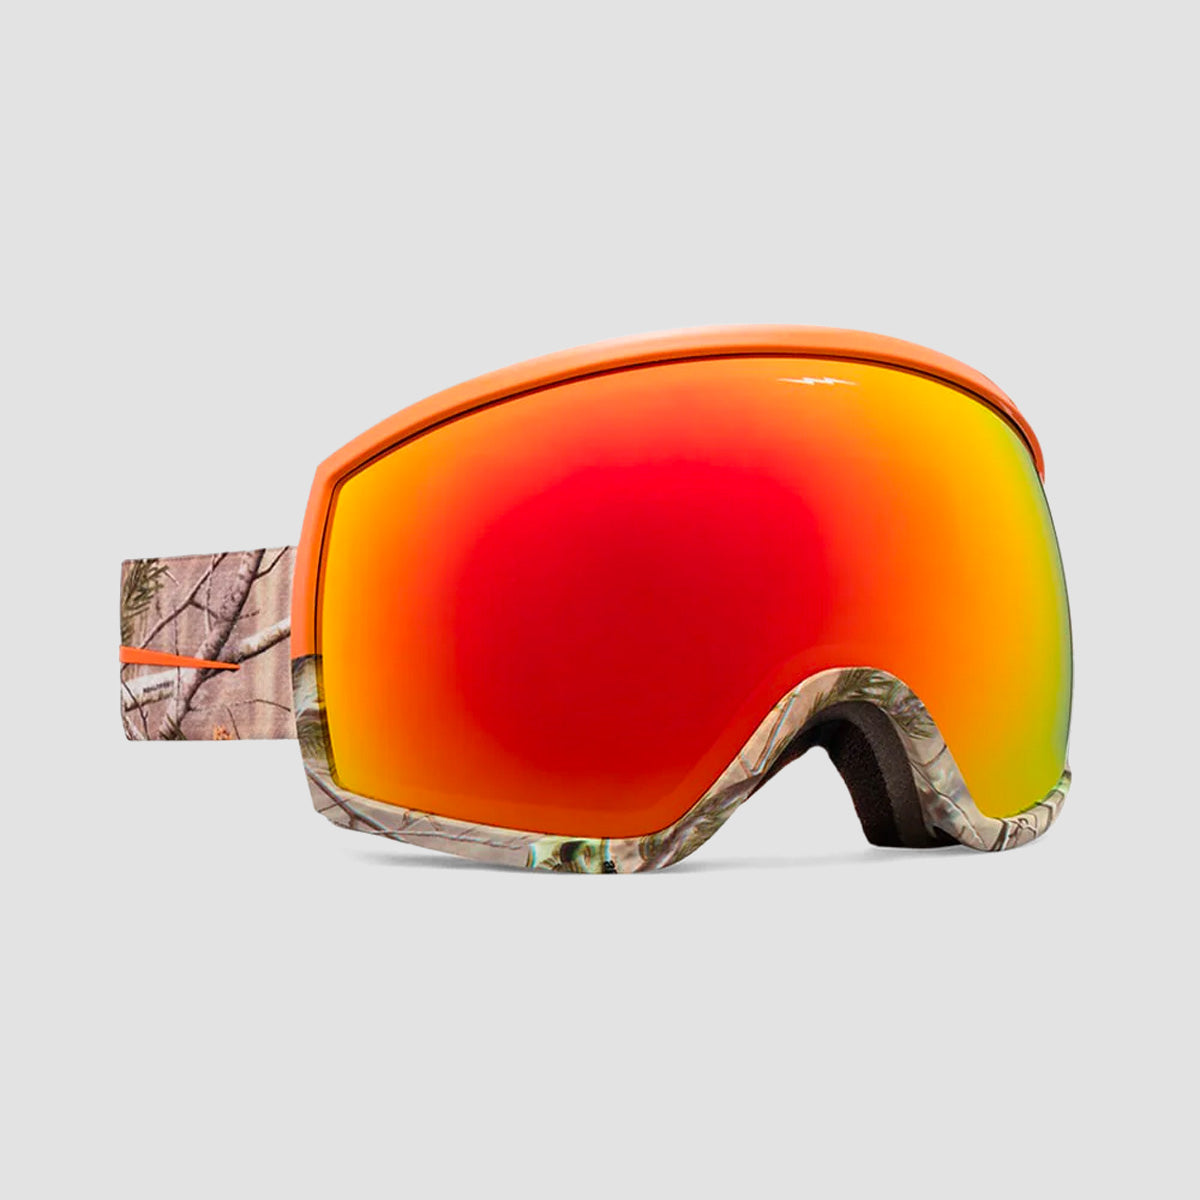 Electric EG2-T Snow Goggles Realtree Hazard/Auburn Red